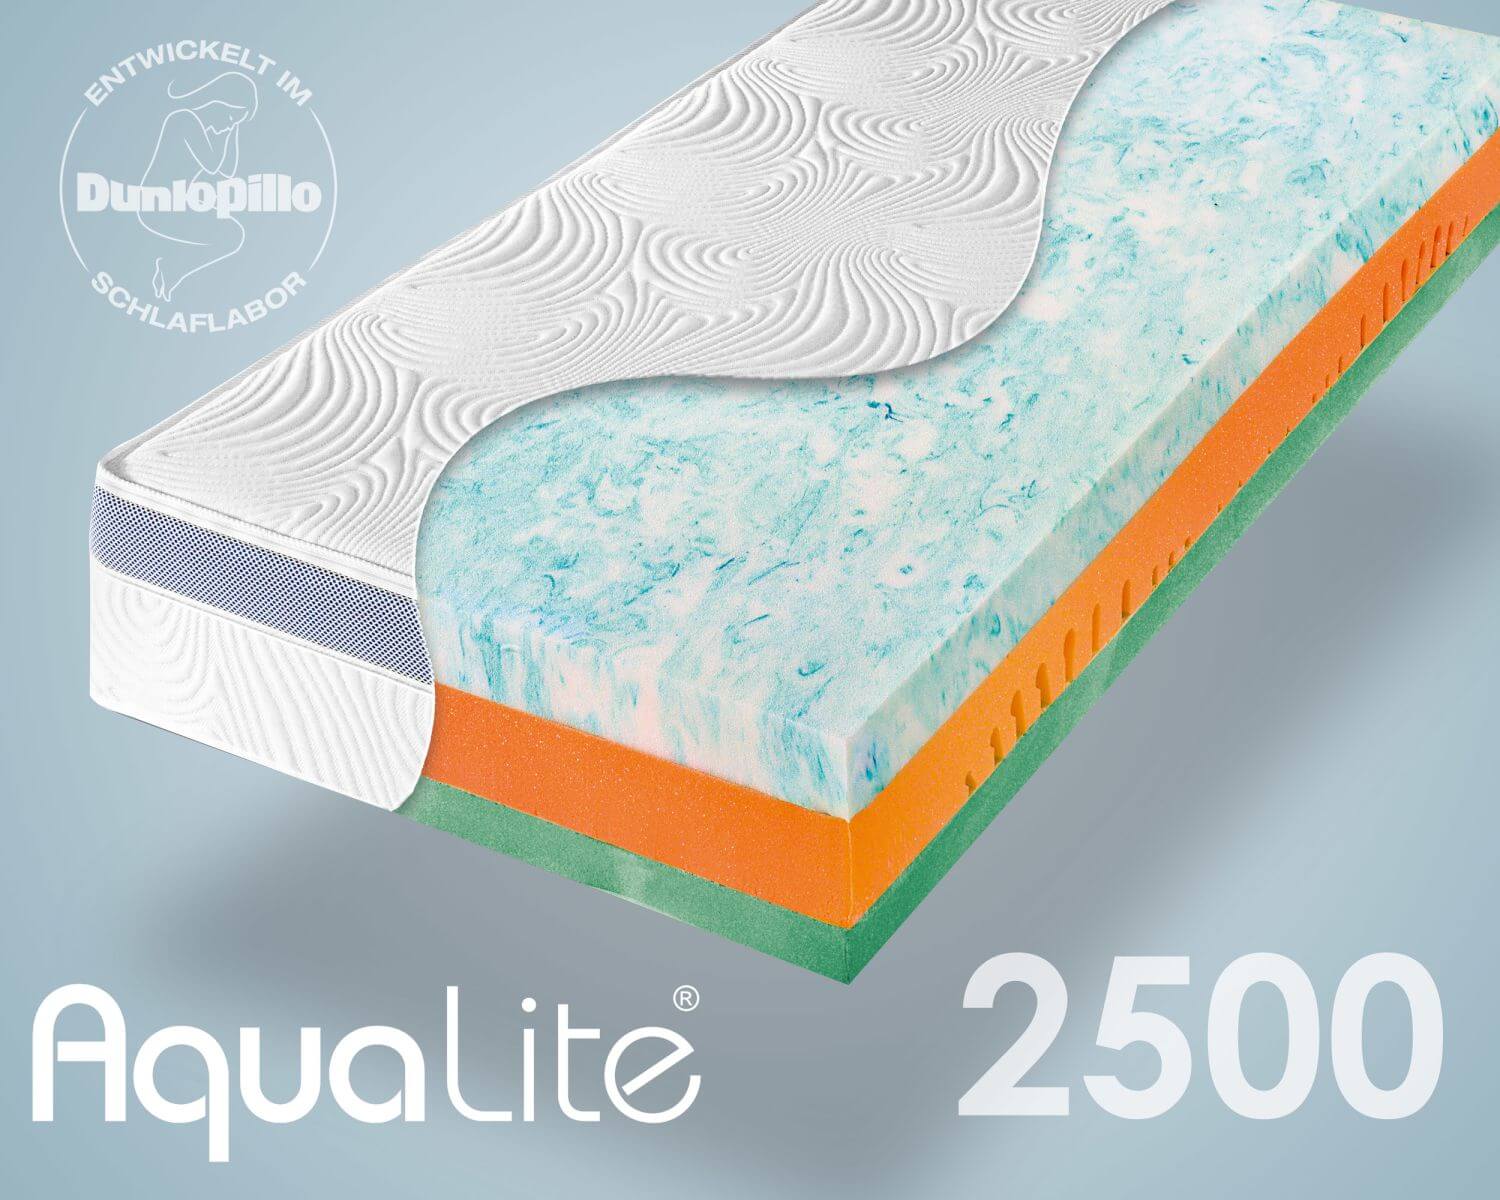 Dunlopillo AquaLite 2500 Matratzen kaufen • slewo.com